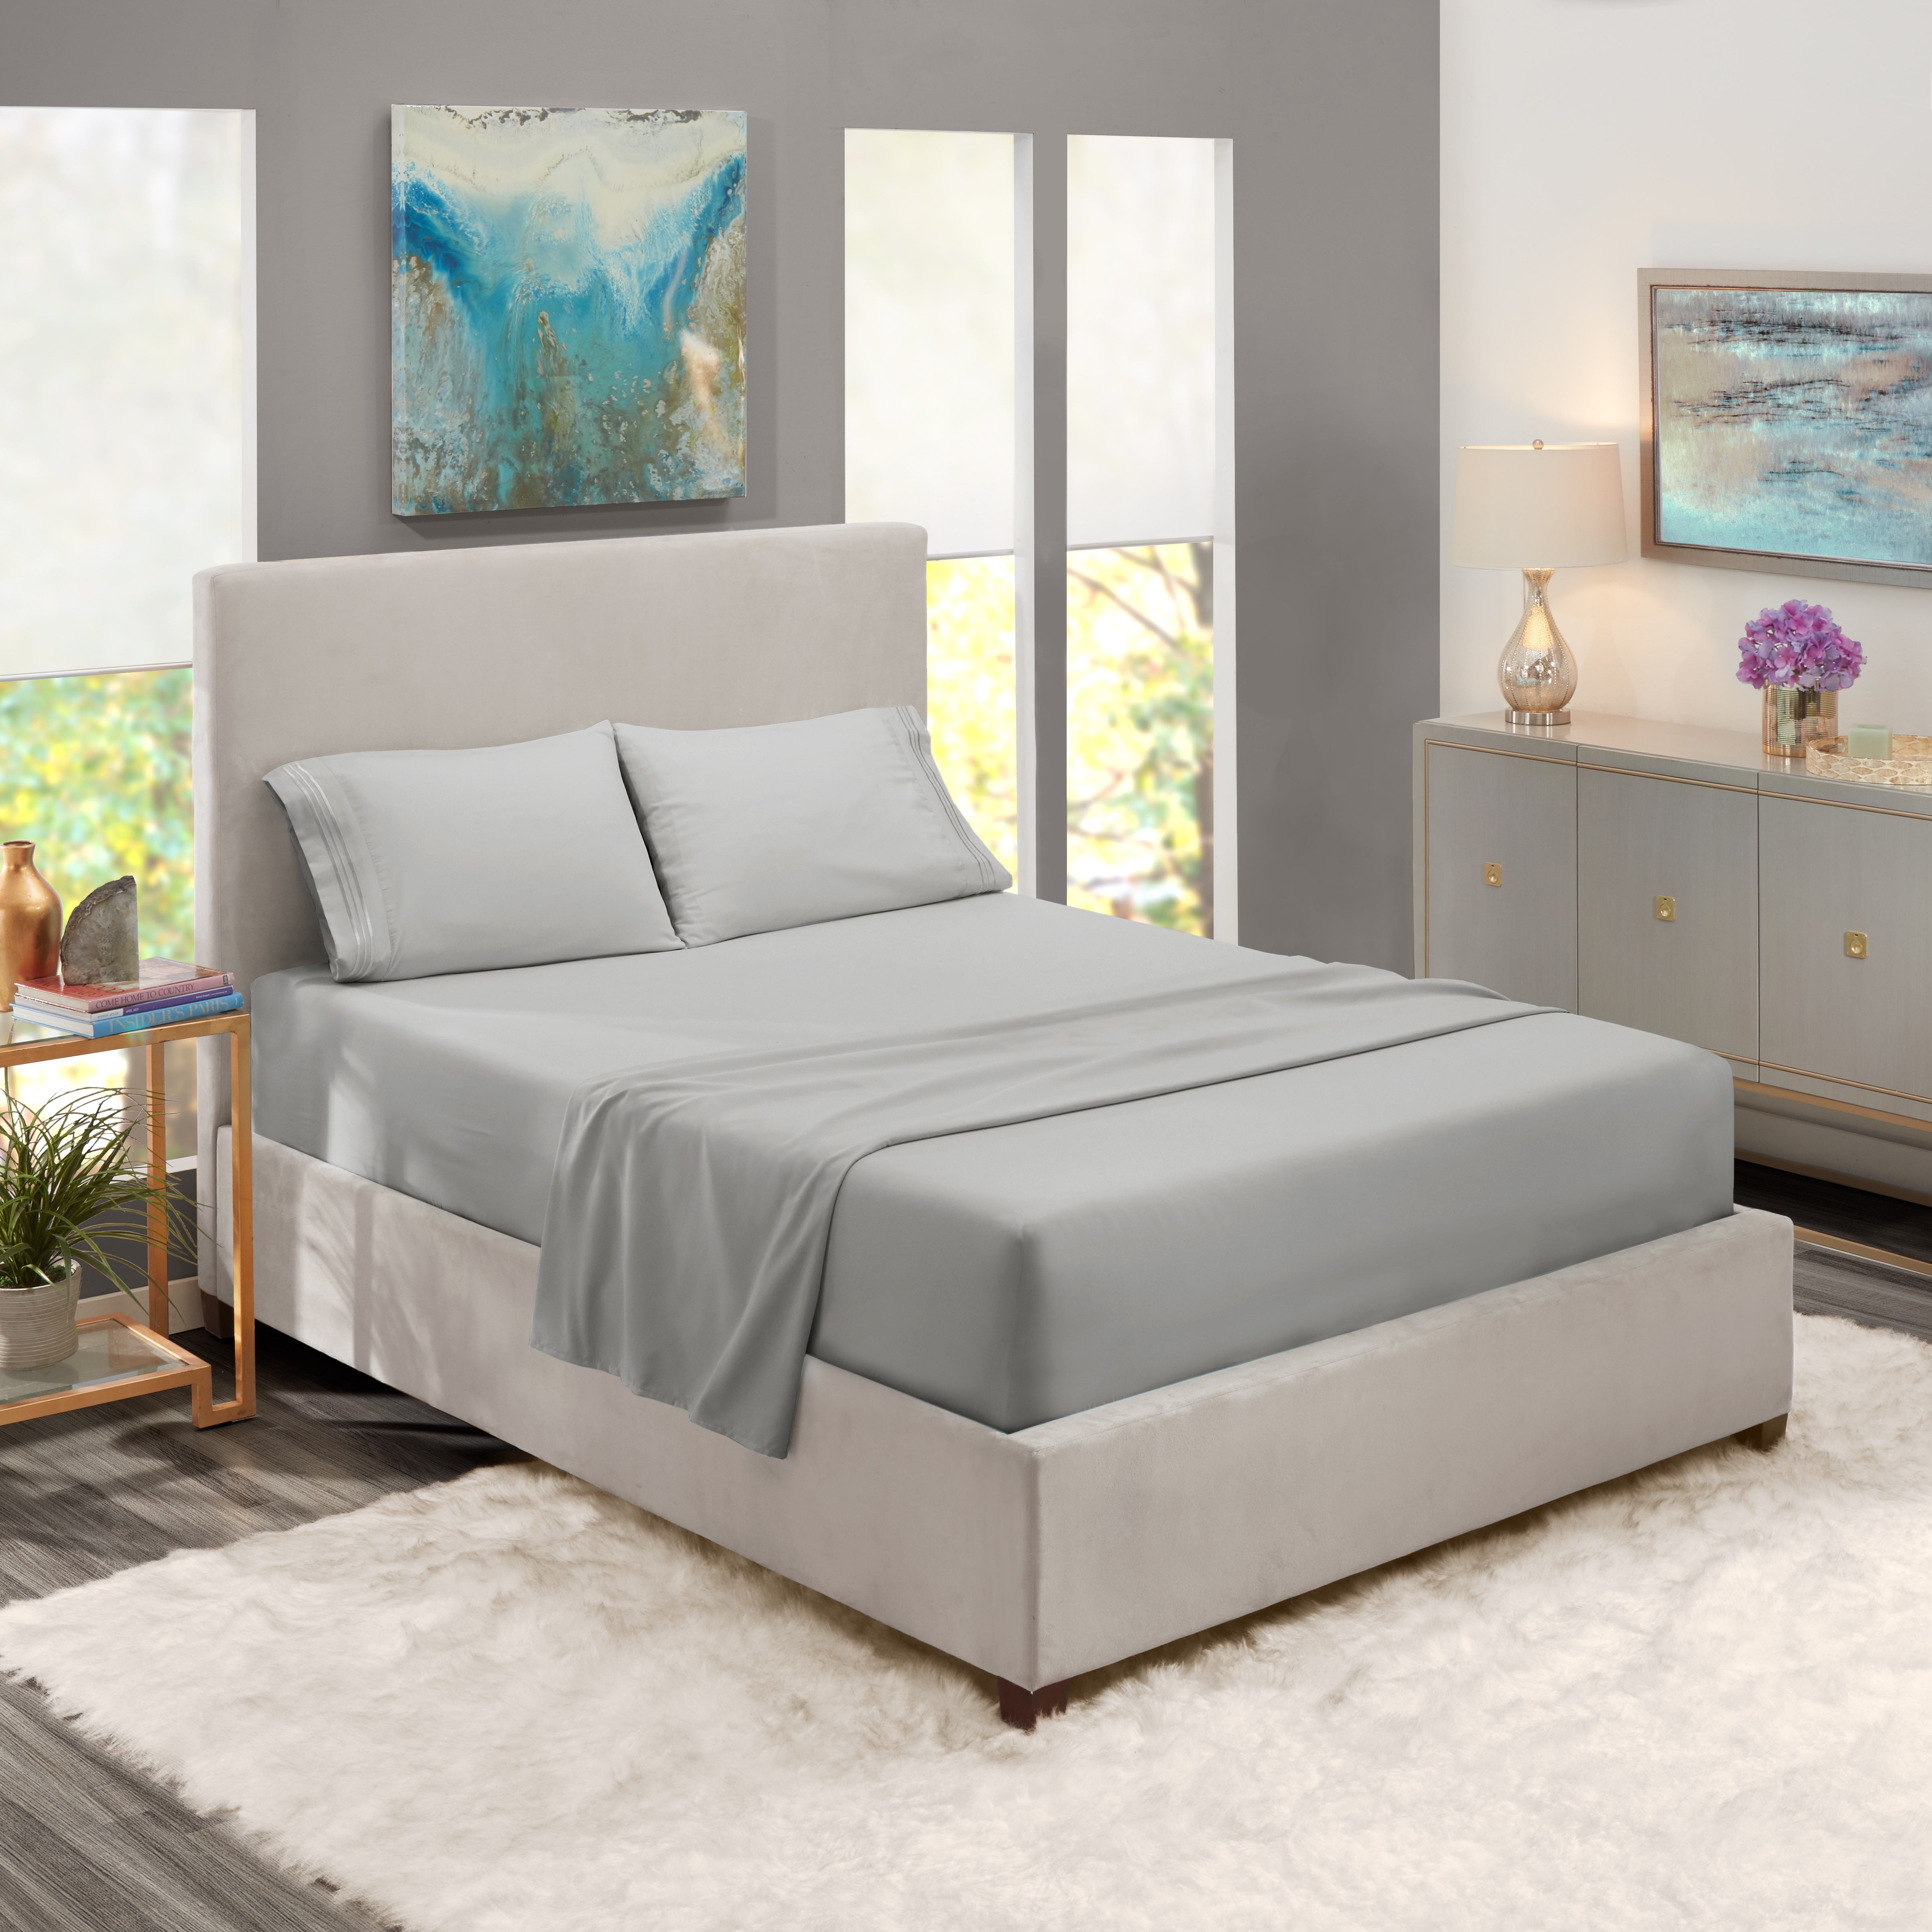 All Sizes Bamboo Bed Sheet Set 6 PCS Deep Pocket Natura Ultra Soft Cool Bedding 